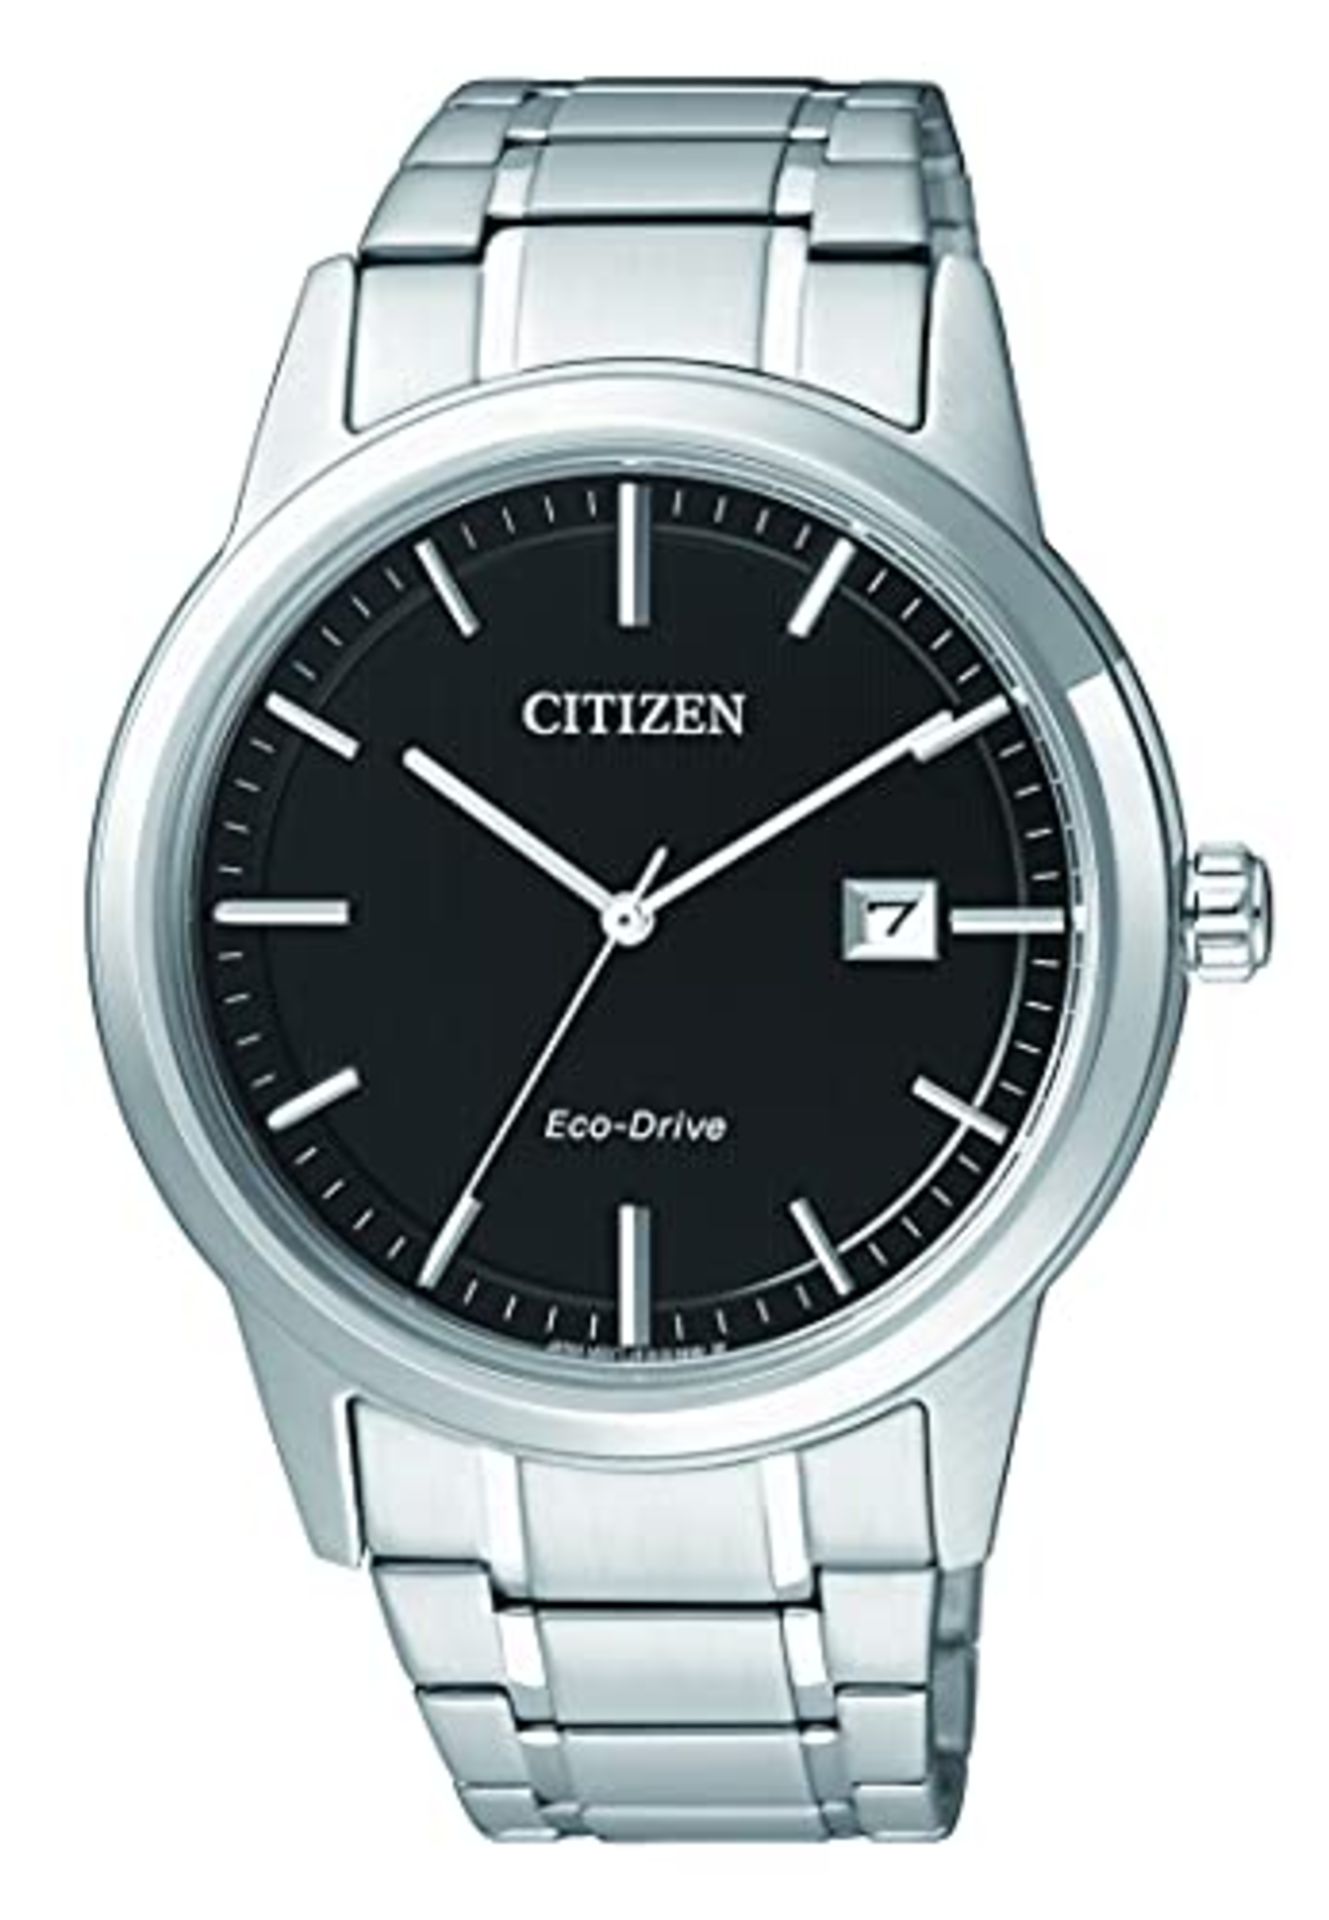 RRP £117.00 CITIZEN Men's Analog Quartz Watch with Stainless Steel Bracelet AW1231-07E, Black